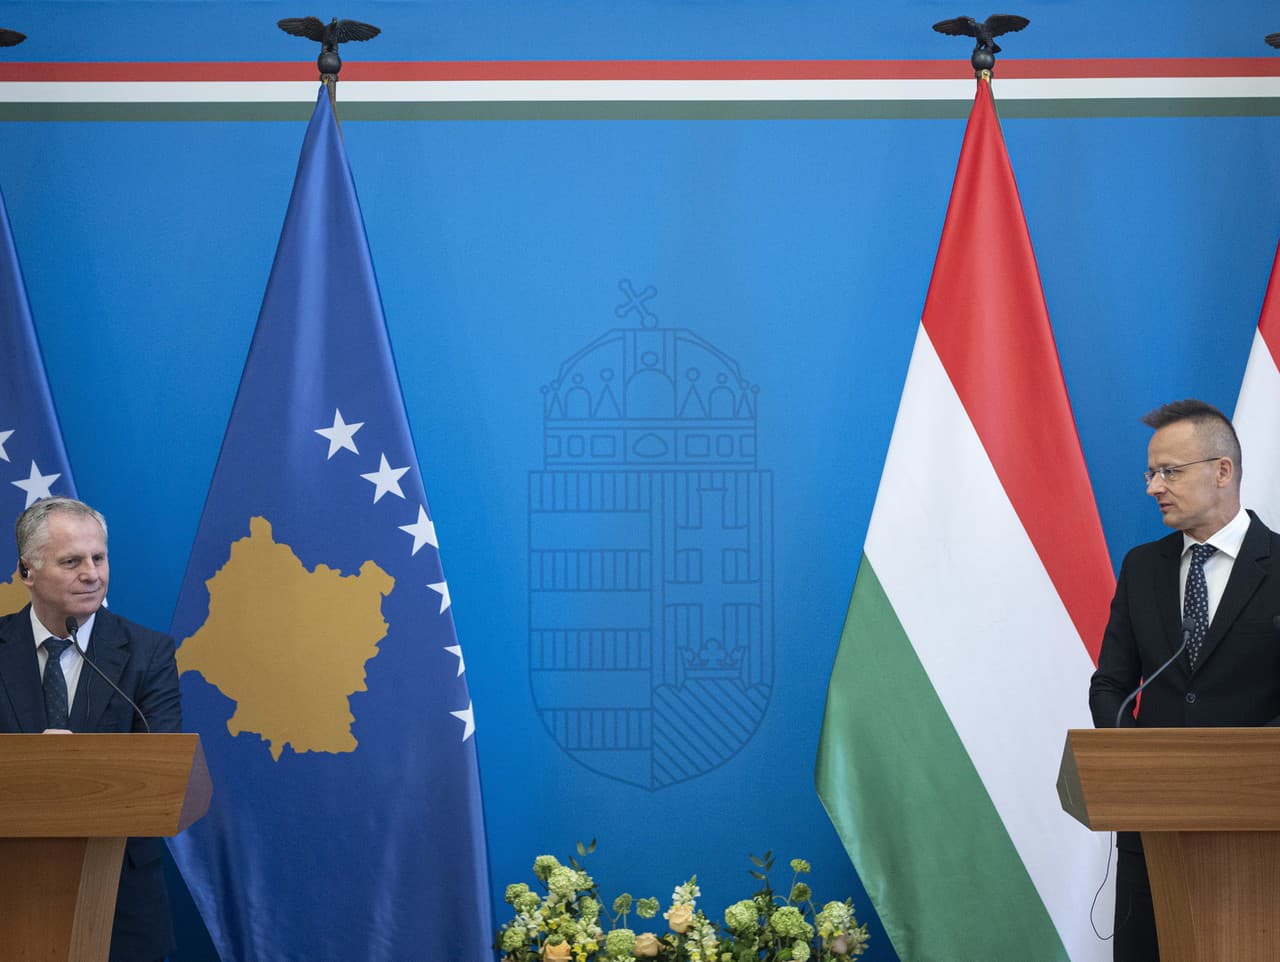 Podpredseda kosovskej vlády Besnik Bislimi a maďarský minister zahraničných vecí Péter Szijjártó 